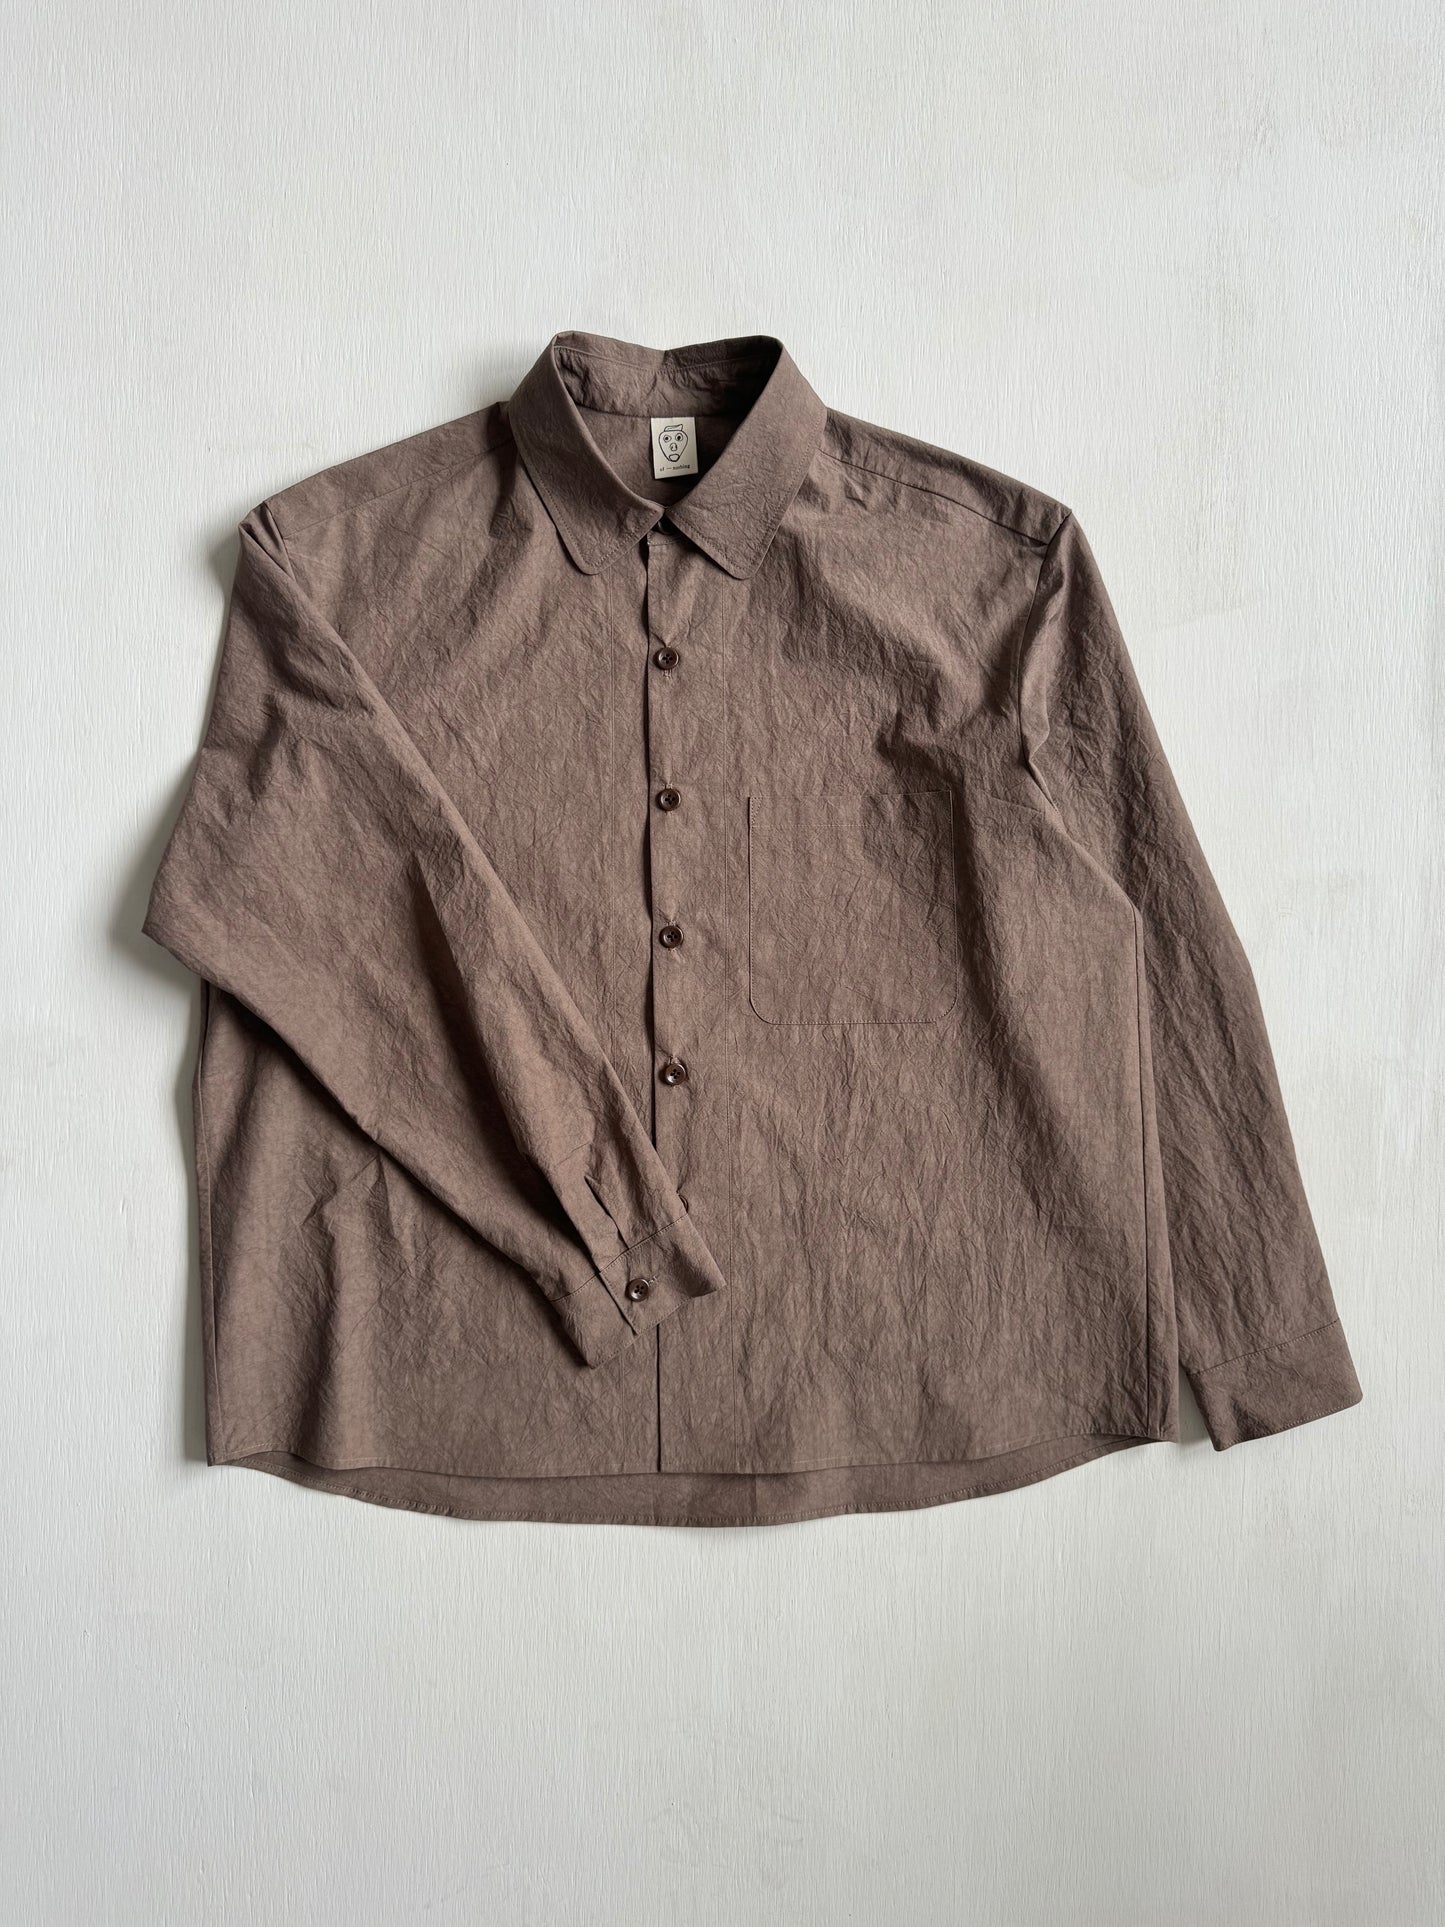 Tent Shirt in Brown Cotton/Linen Typewriter Cloth